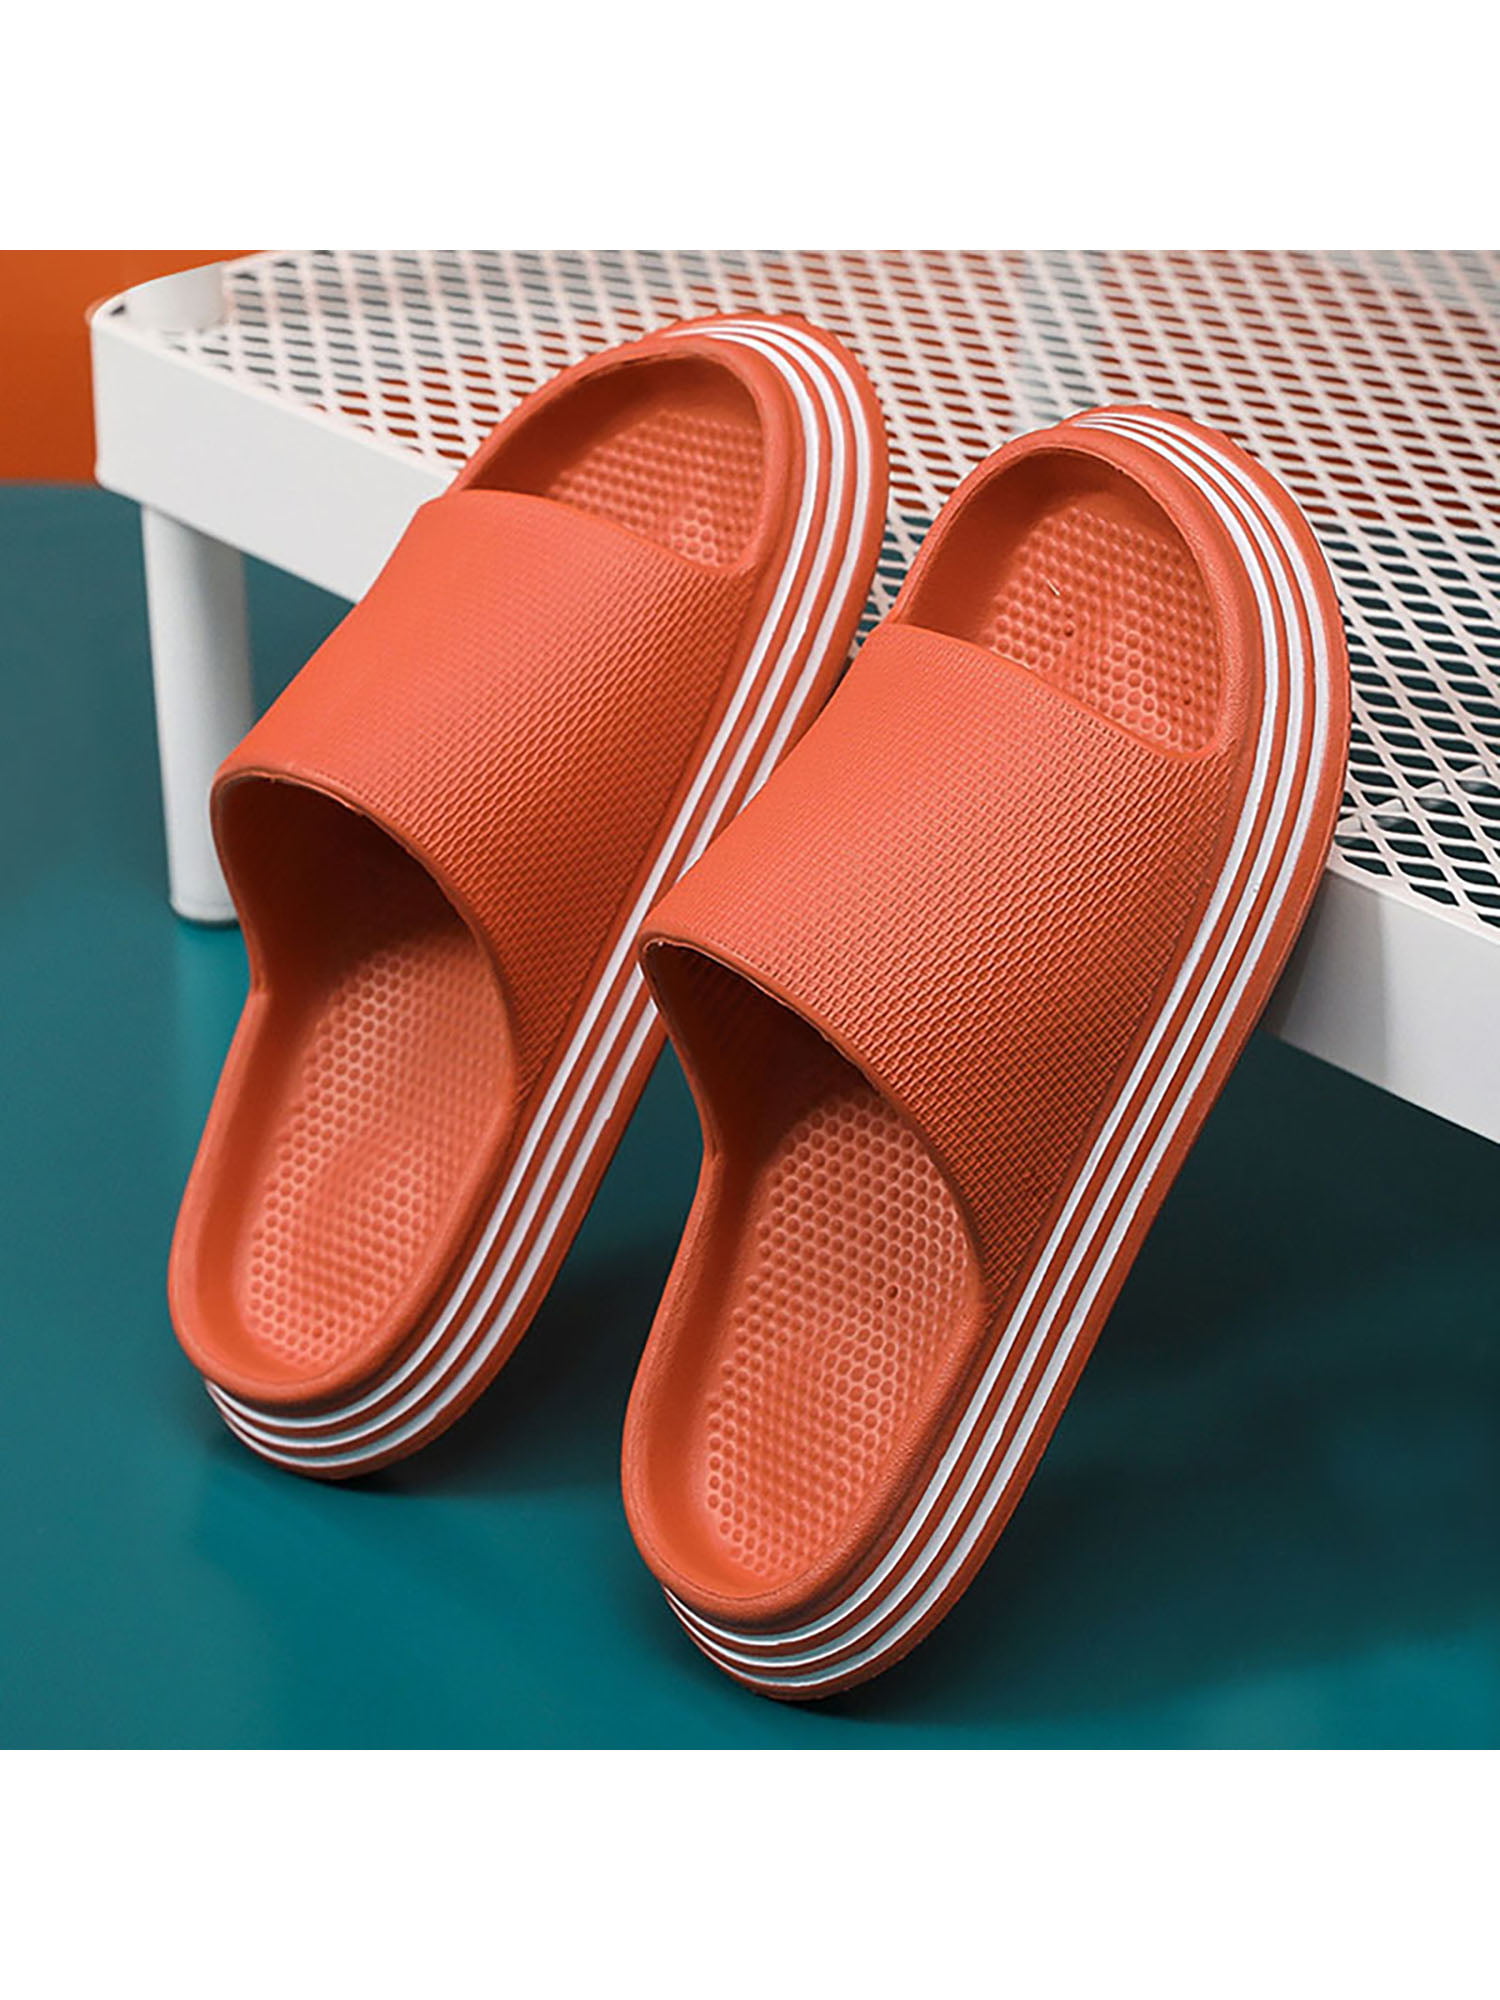 Adults Unisex Anti-Slip Imitation Grass Sandals Summer Comfortable Flat Shoes Slipper for Home Beach Swim